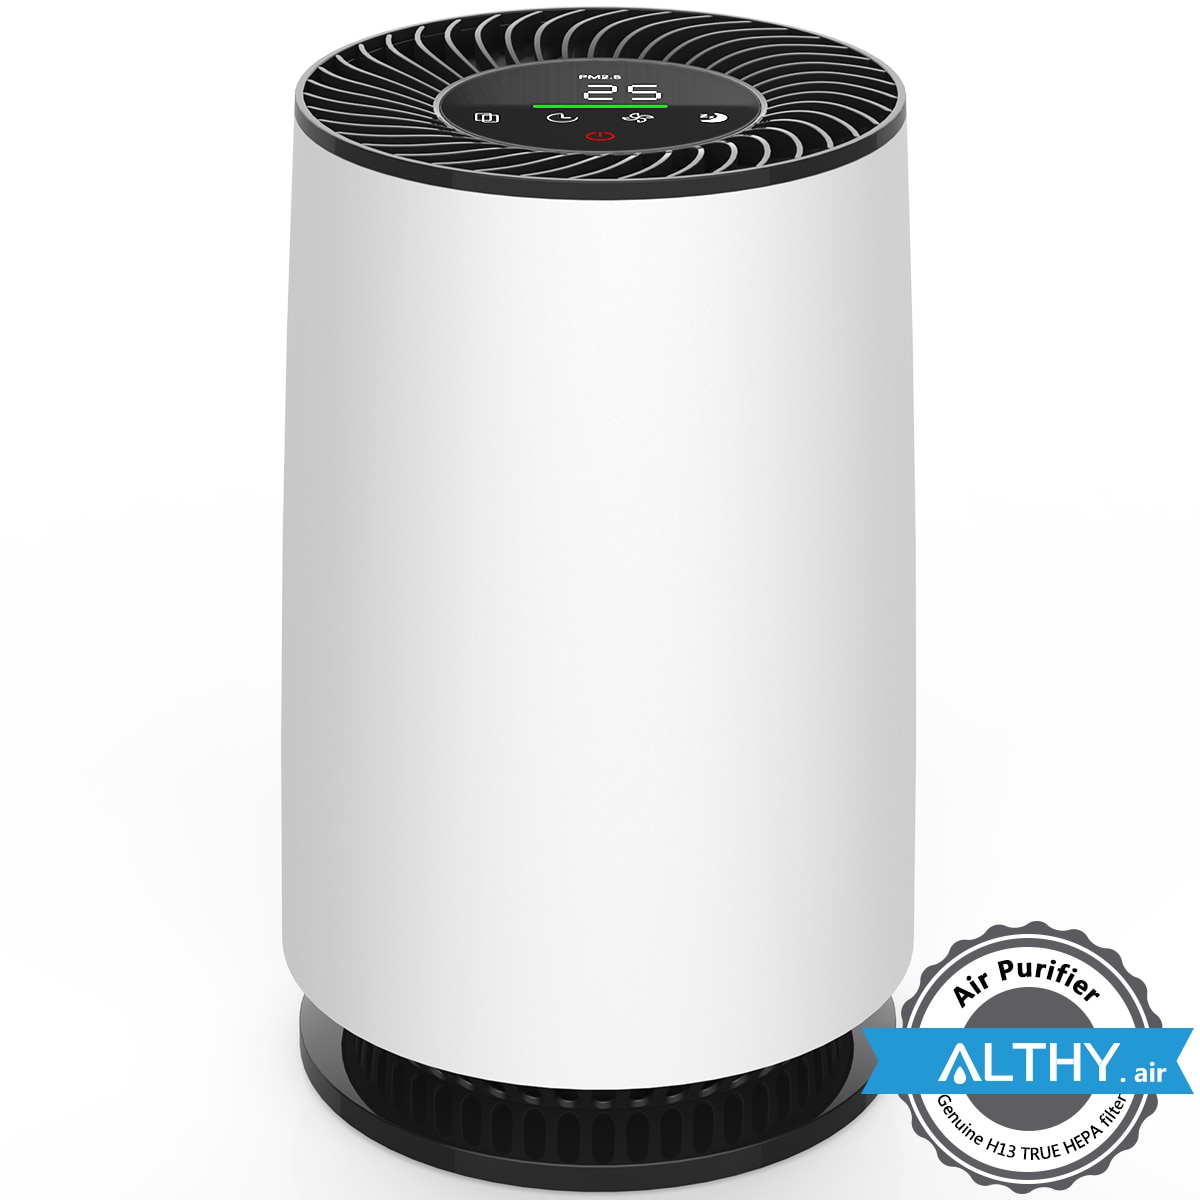 ALTHY A12 Air Purifier Cleaner TRUE HEPA Filter- PM2.5 sensor - Remove Smoke Dust Mold Pollen odor Allergies Home Pets desktop